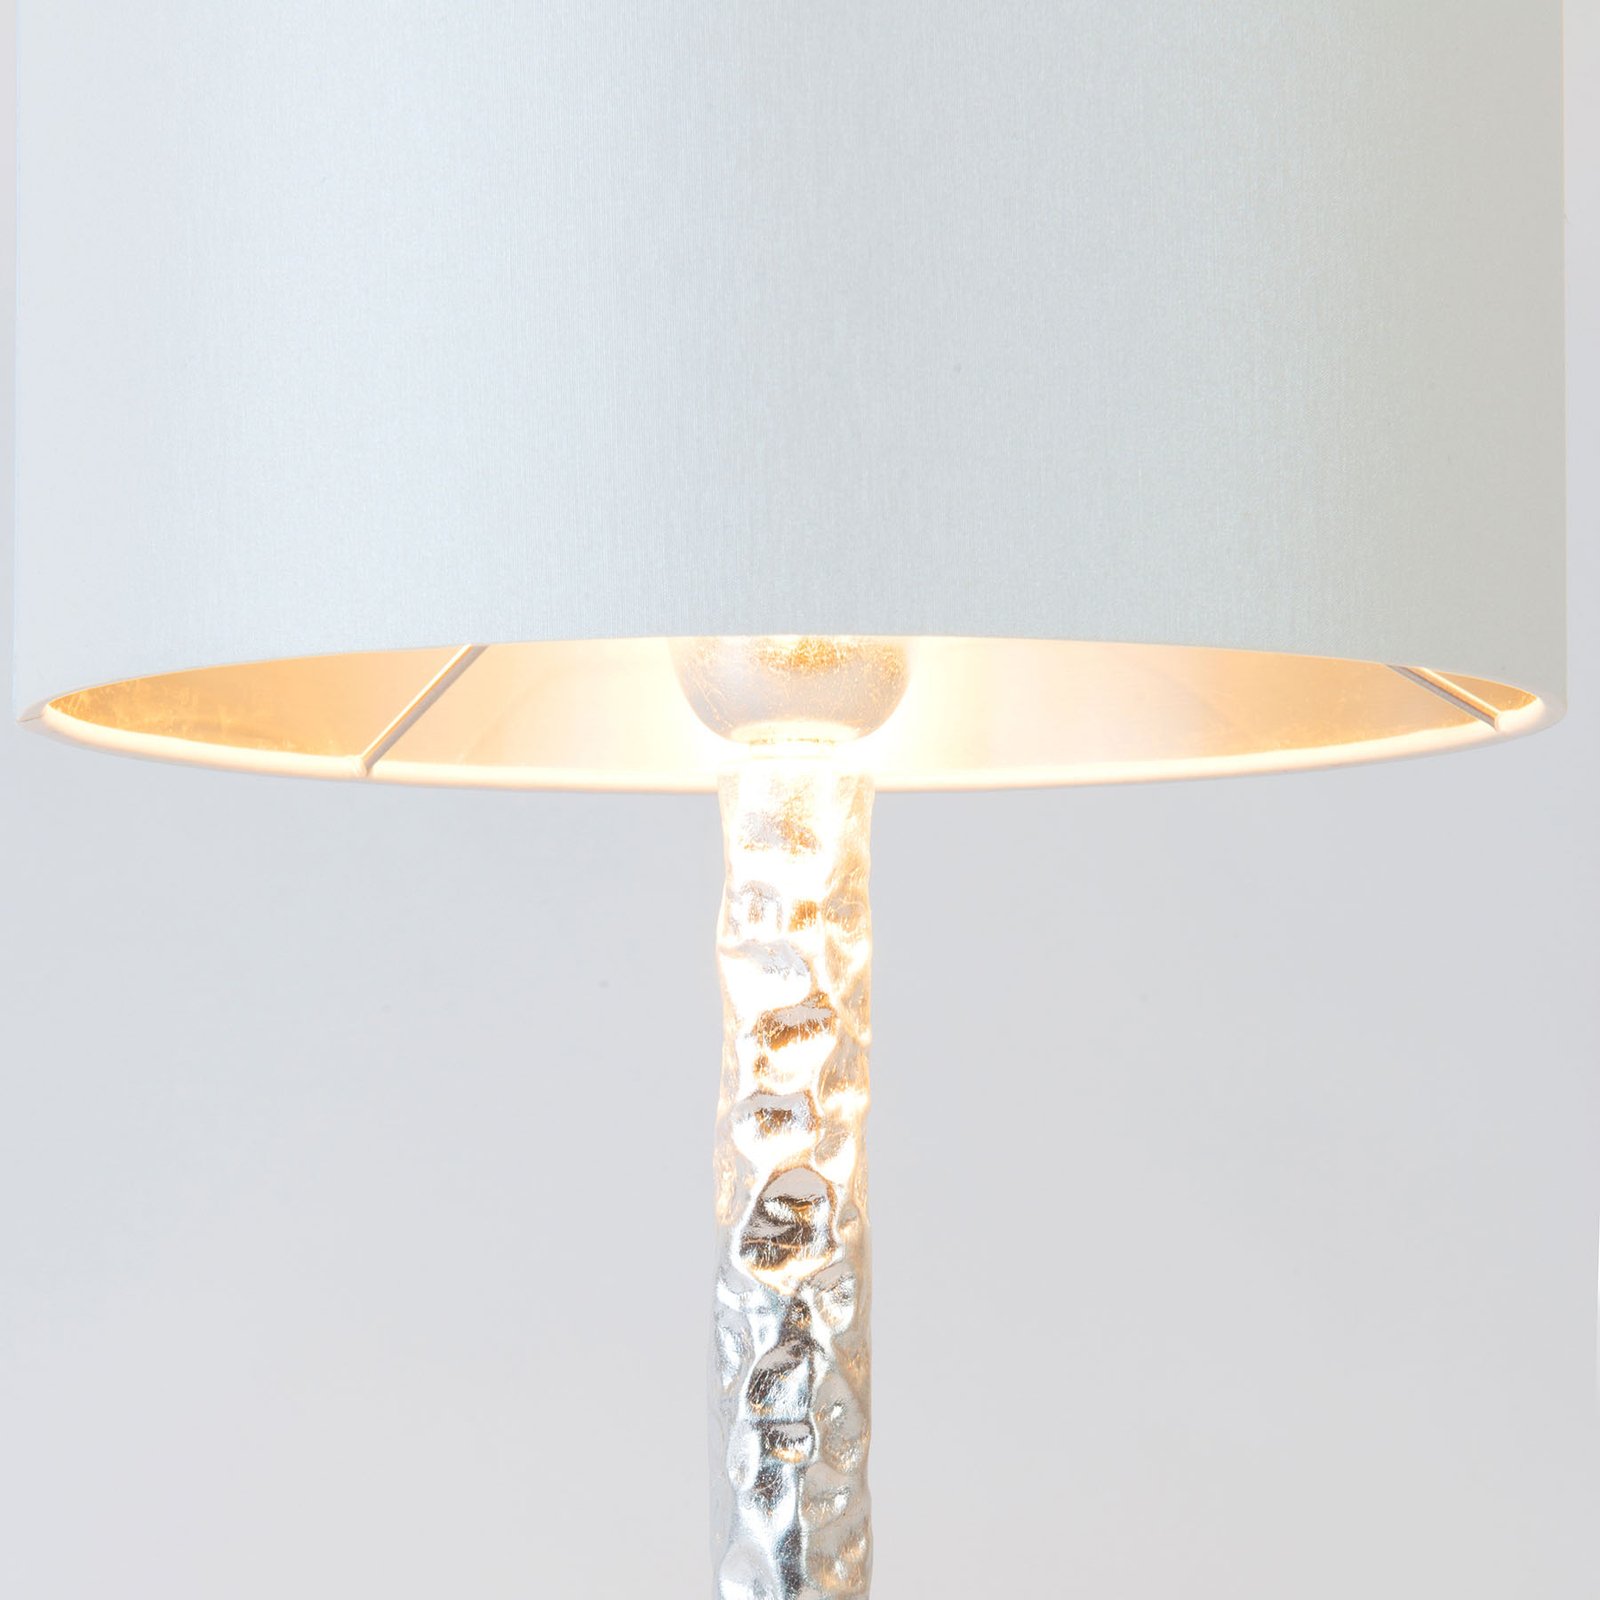 Lampe table Cancelliere Rotonda blanc/argent 57 cm